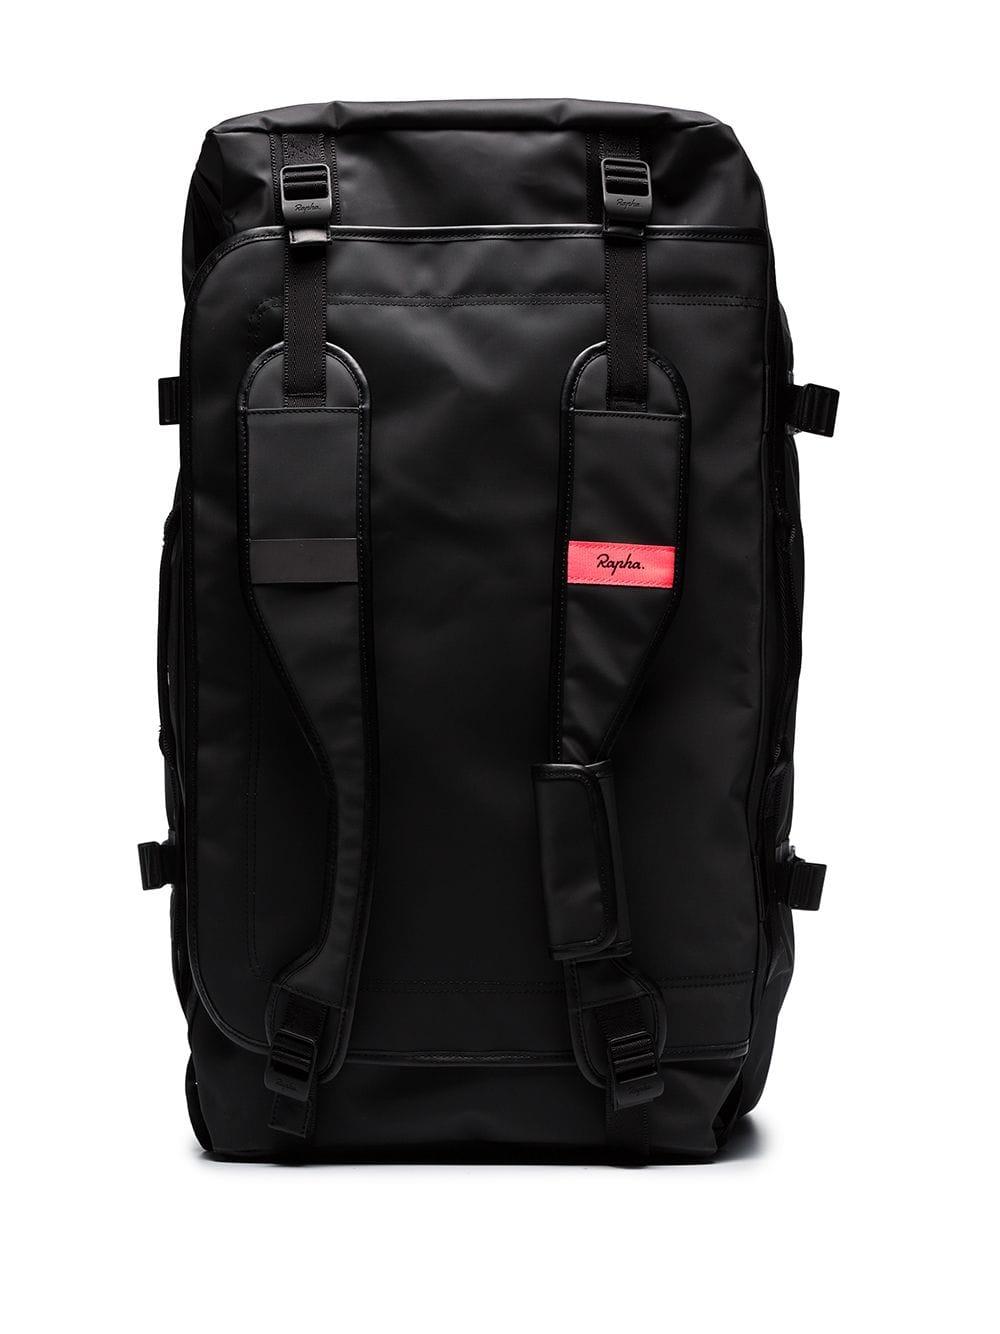 Rapha Leather Weekend Backpack in Black for Men - Lyst